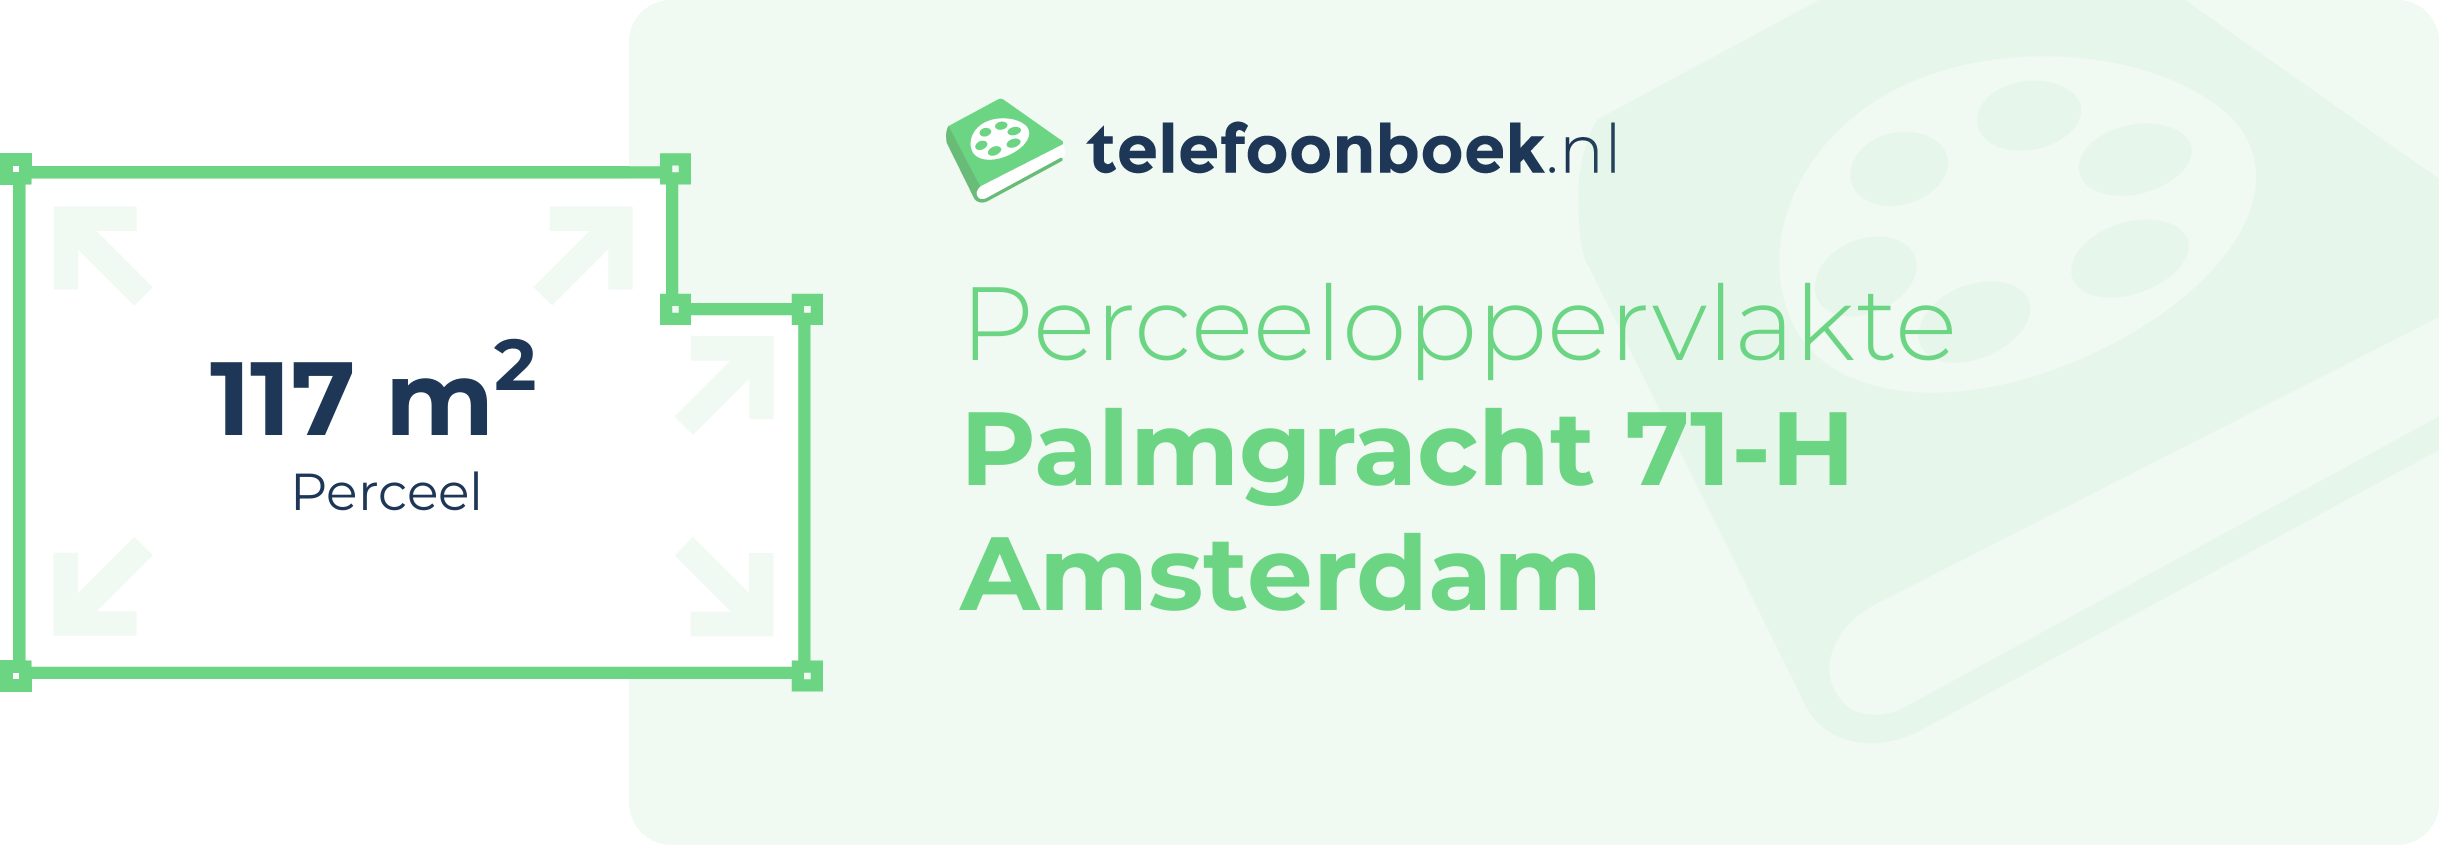 Perceeloppervlakte Palmgracht 71-H Amsterdam